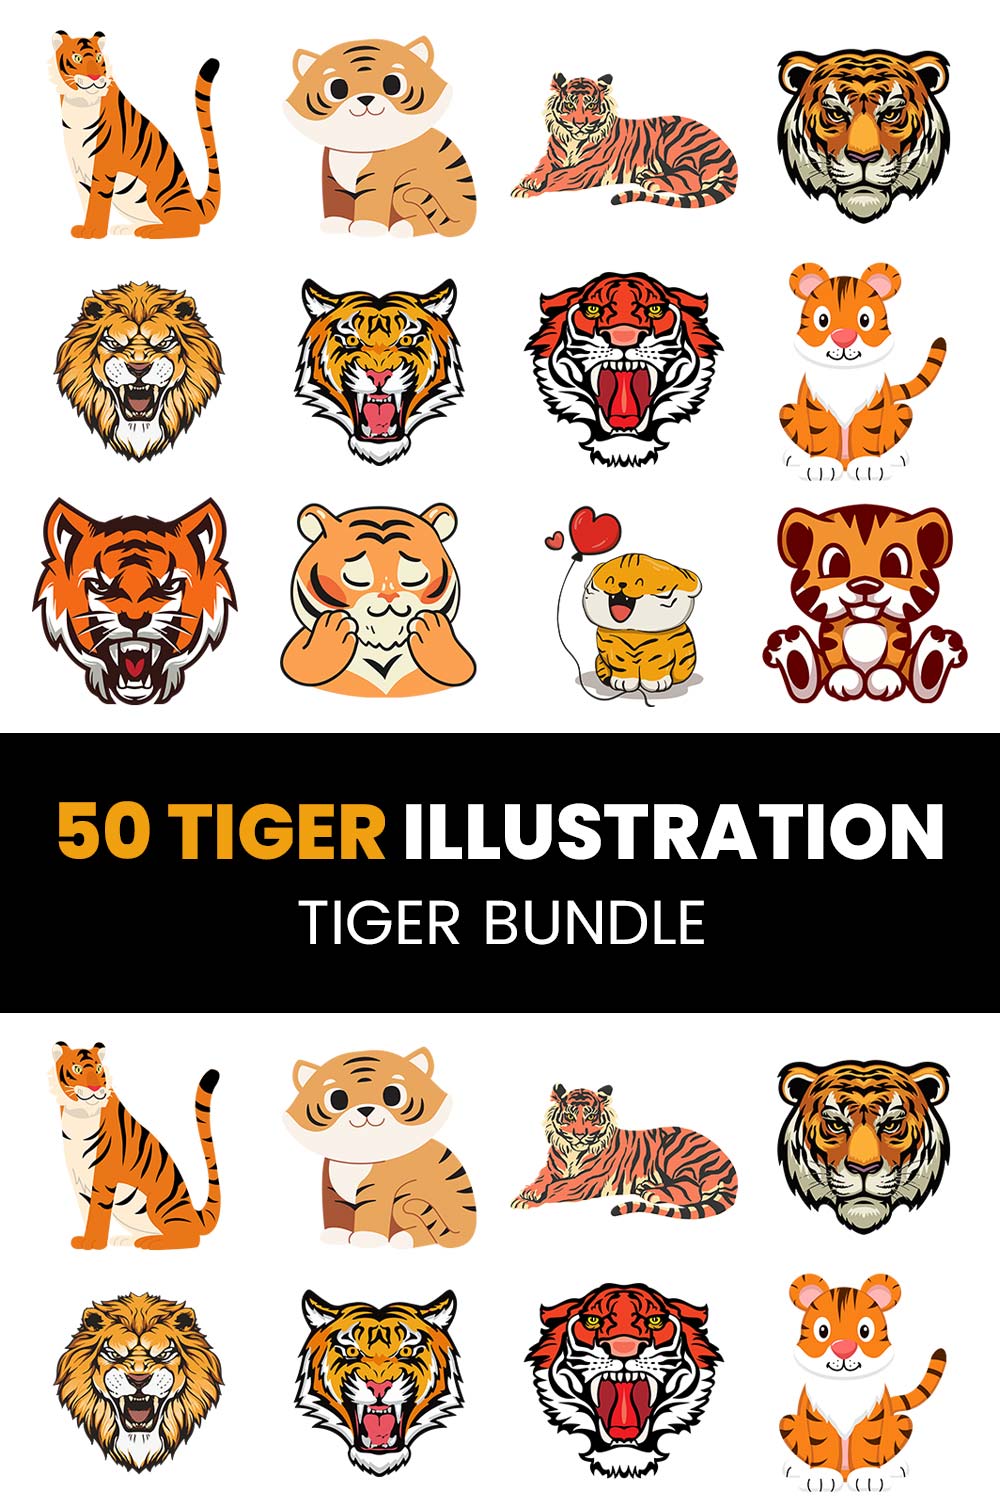 Tiger Face Graphic Illustration pinterest image.